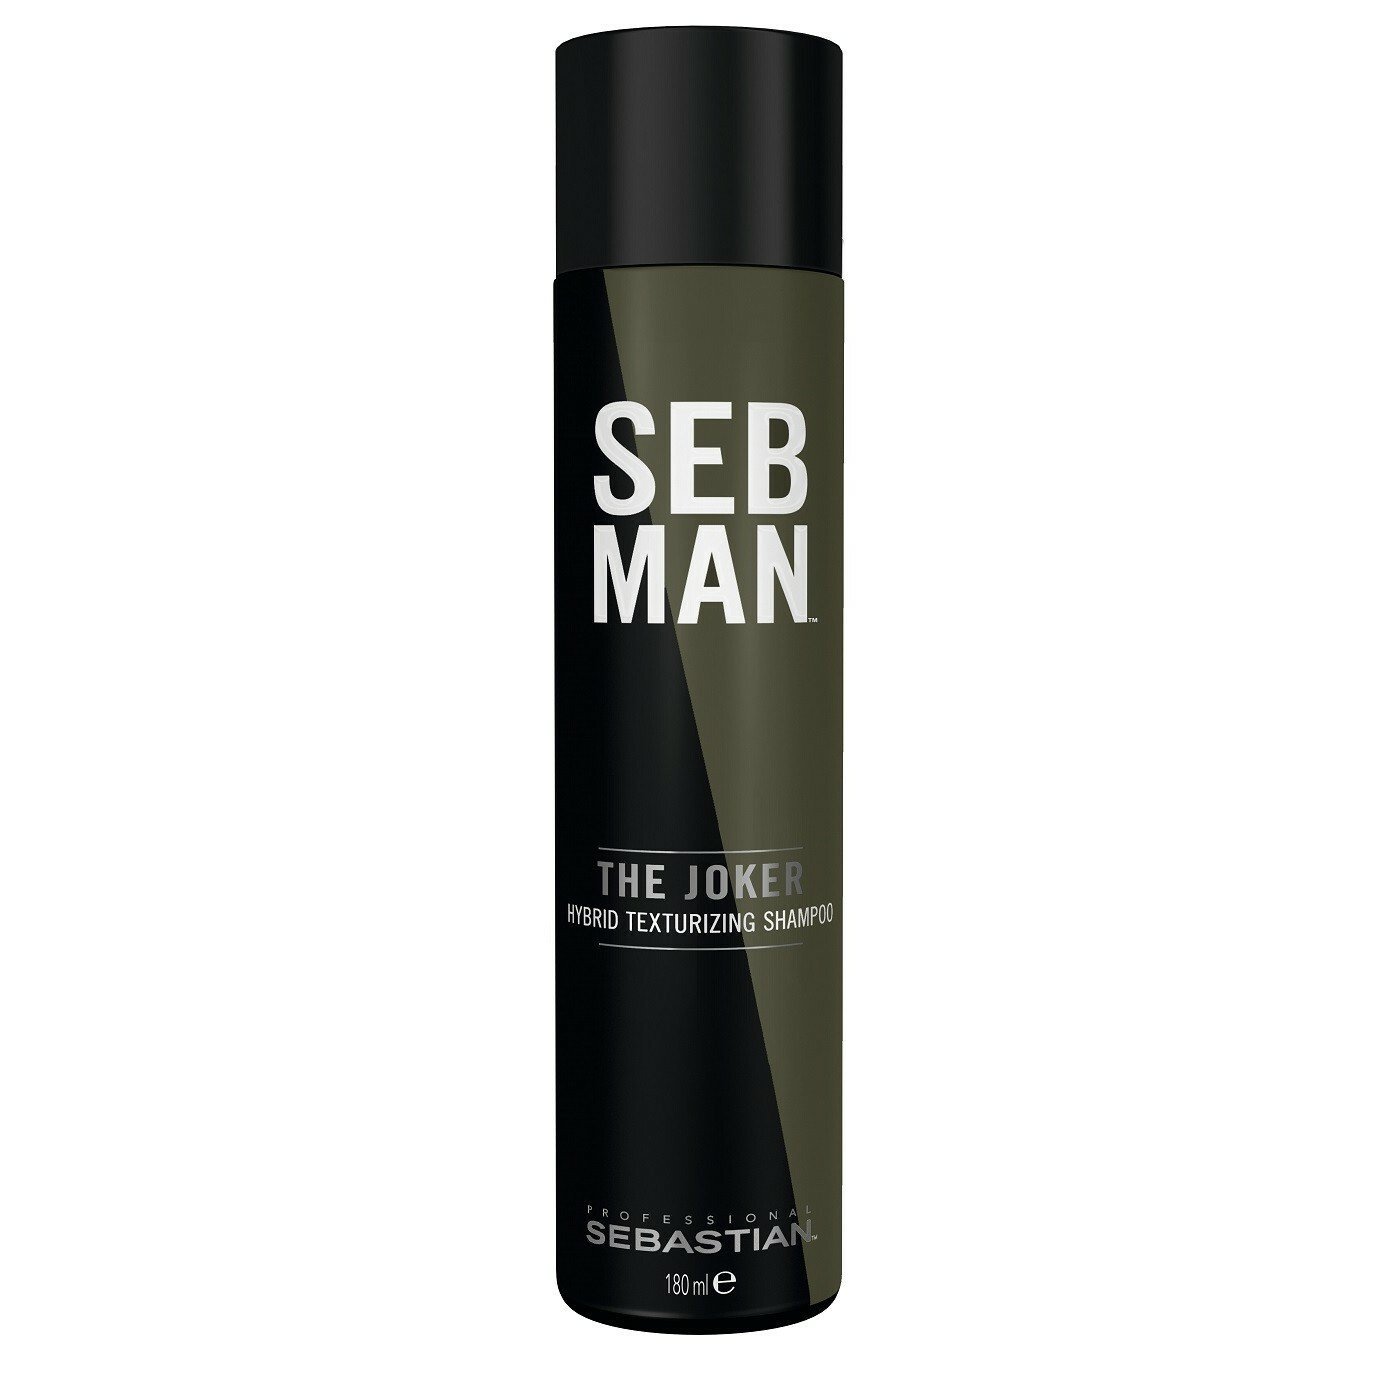 Seb Man. Shampoing Sec Texturisant Hybride The Joker - 180ml - Concept C. Shop